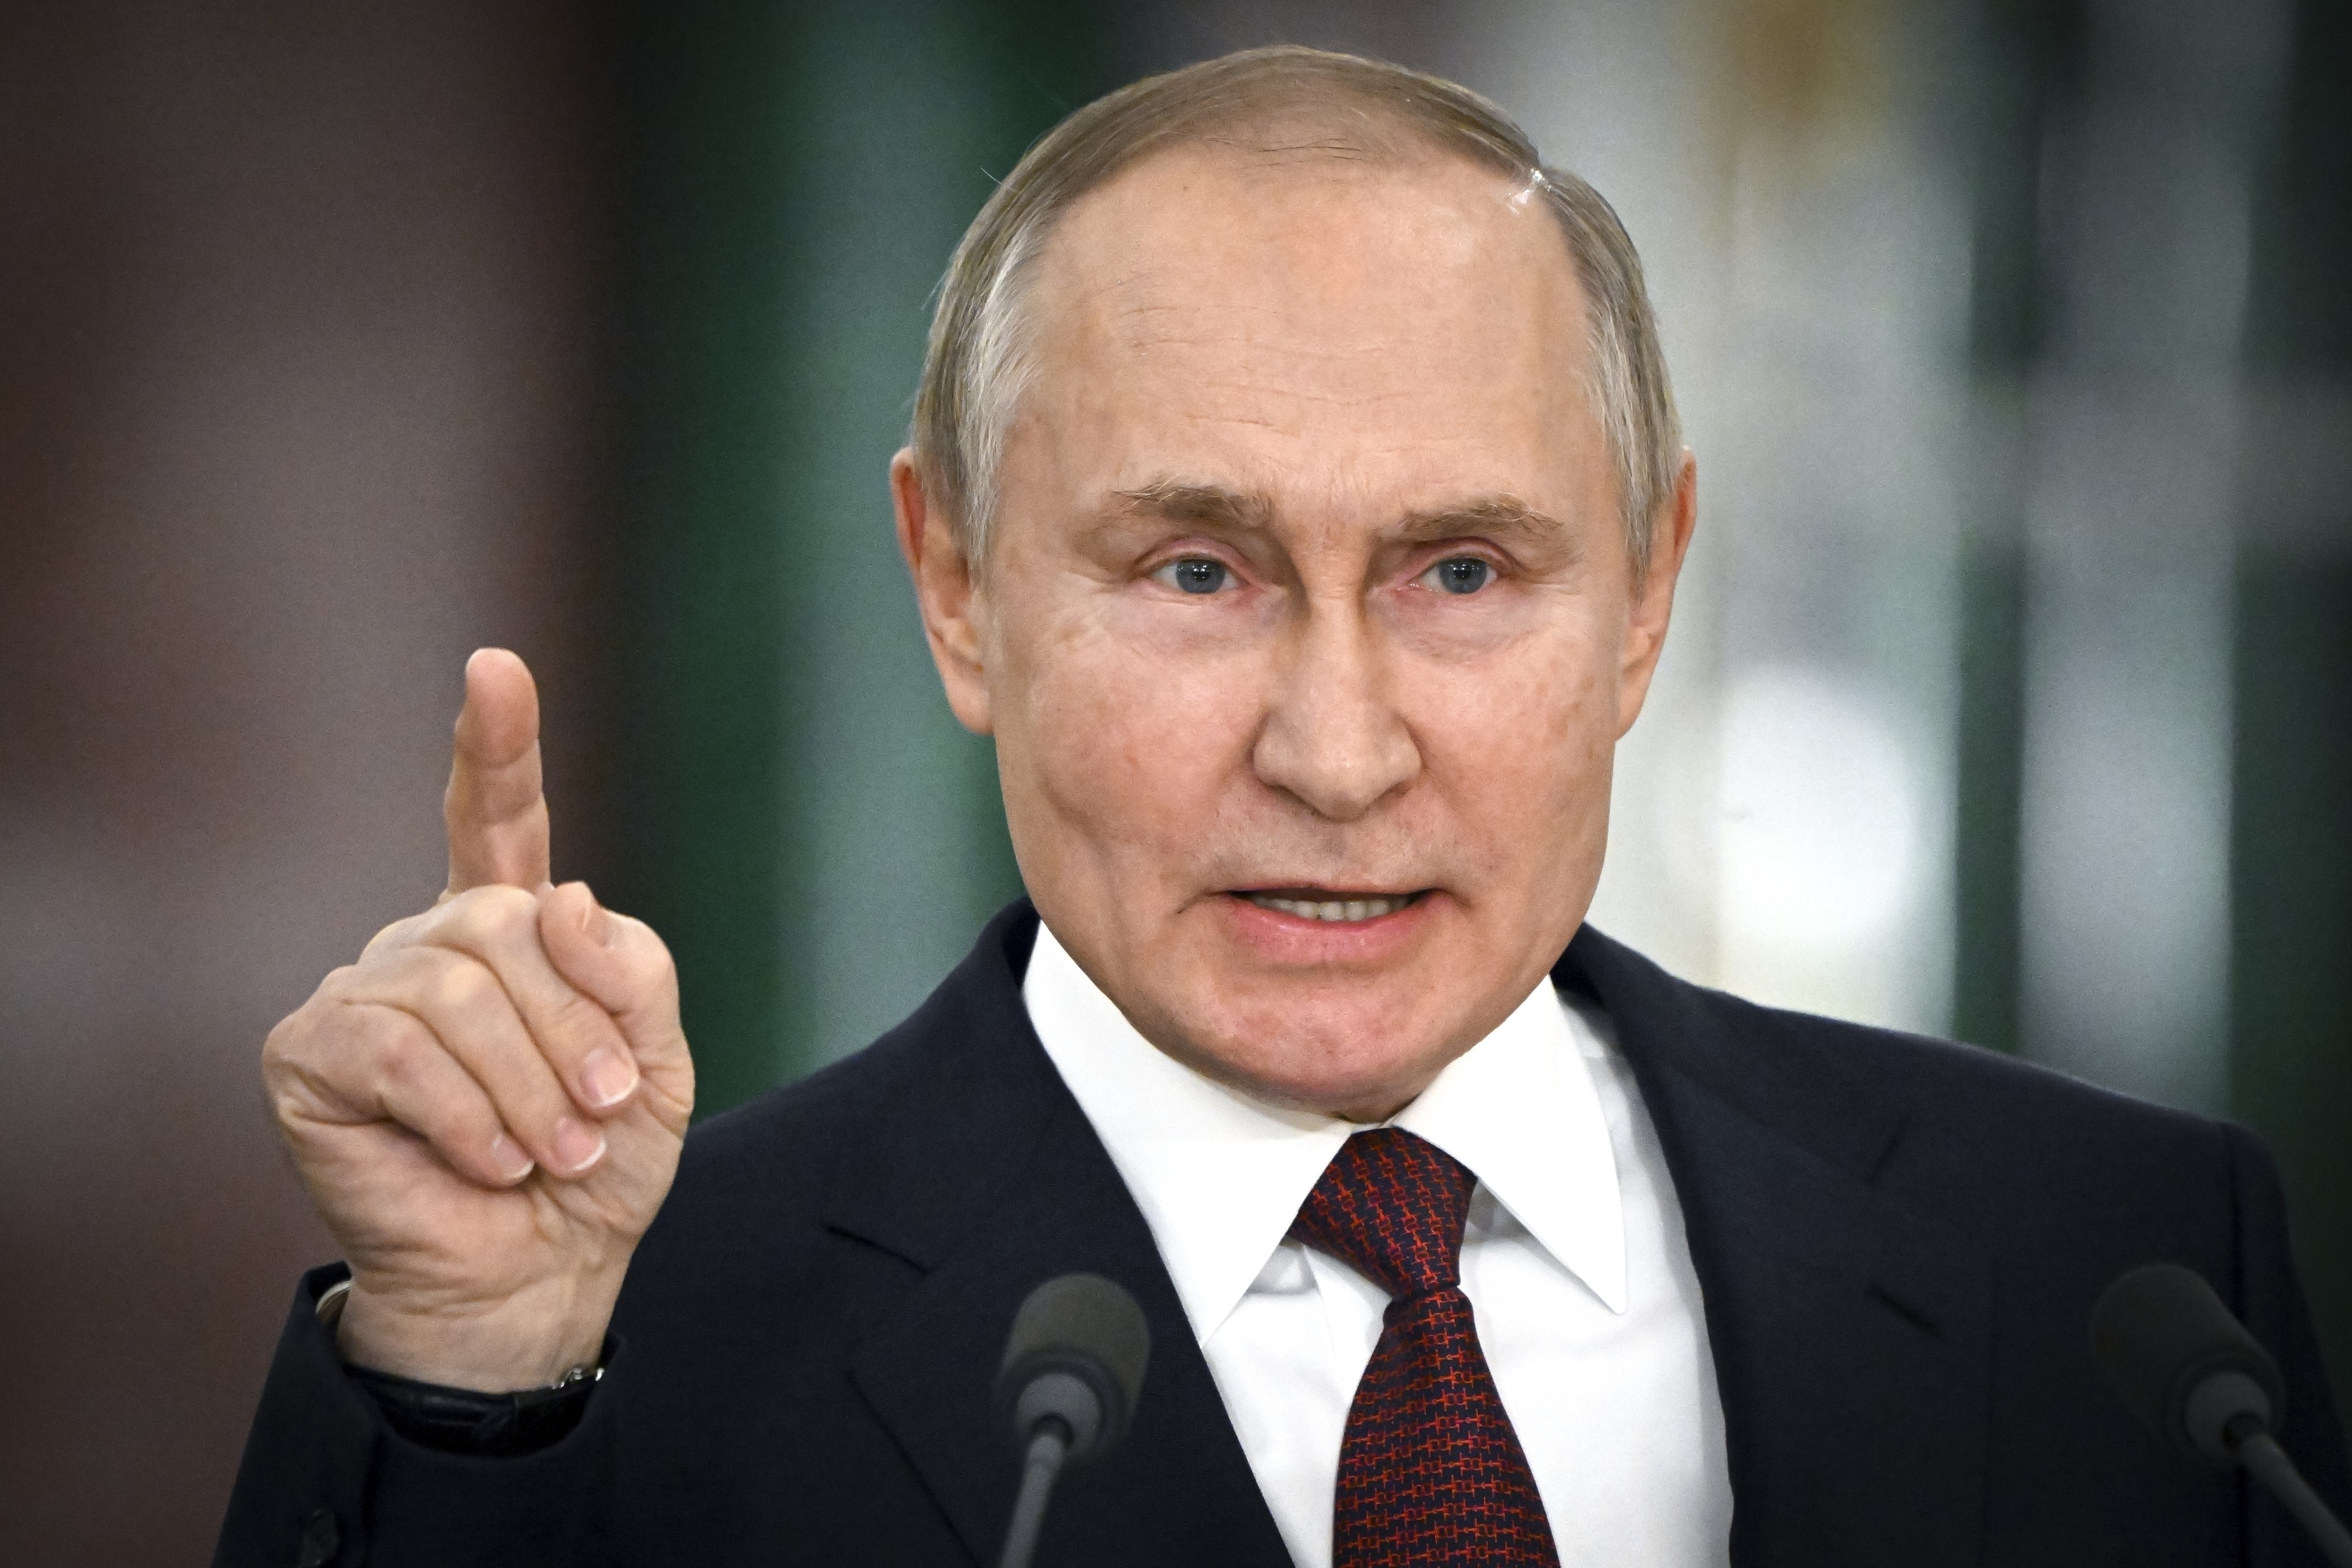 The Kremlin says that Vladimir Putin made no threat to use nuclear weapons. Photo: Kremlin Pool via AP